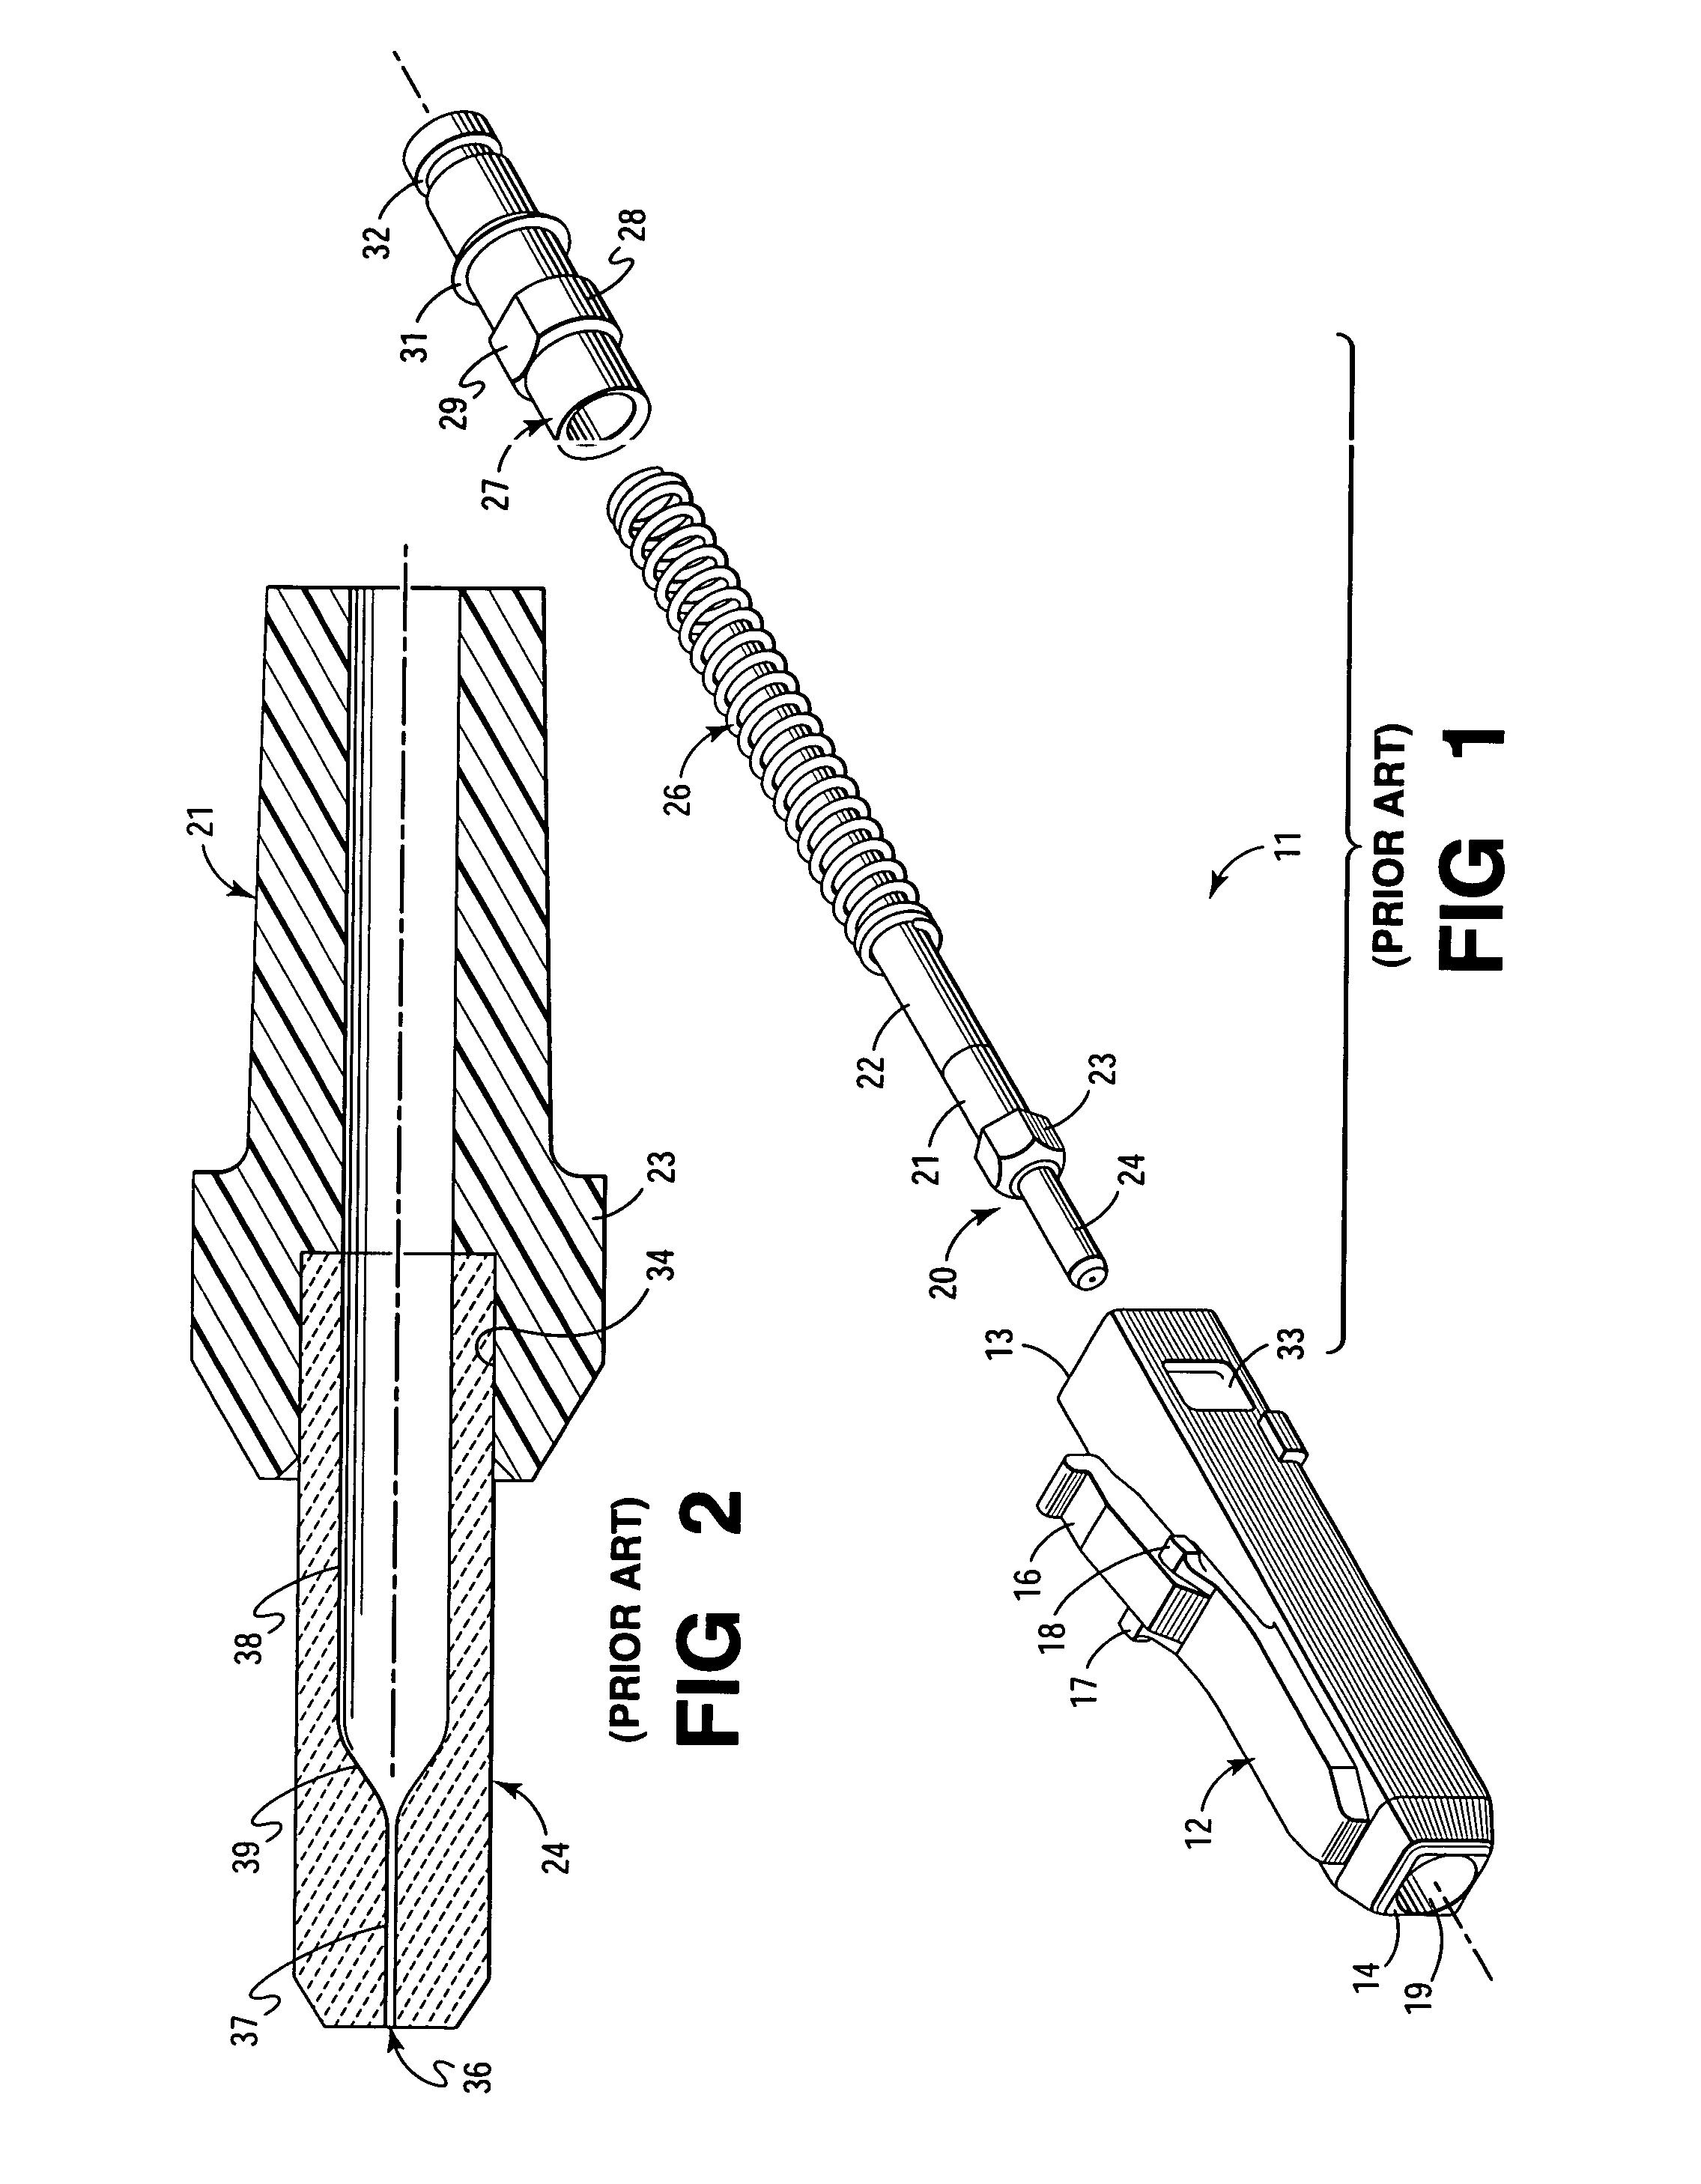 Optical fiber connection utilizing fiber containing ferrules